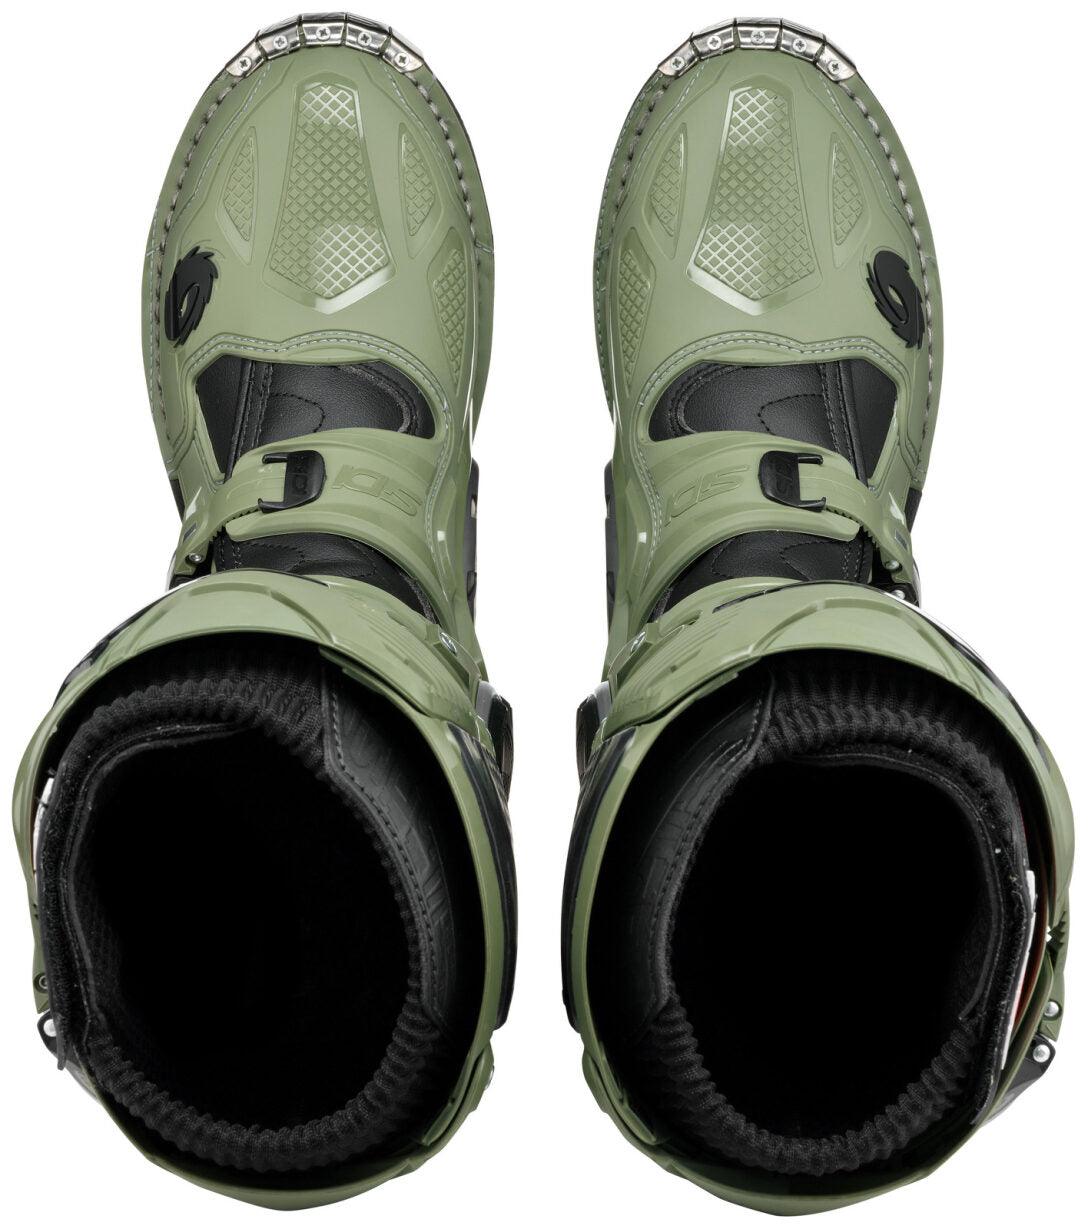 Sidi Crossfire 3 TA Army/Black Boots - Limited Edition